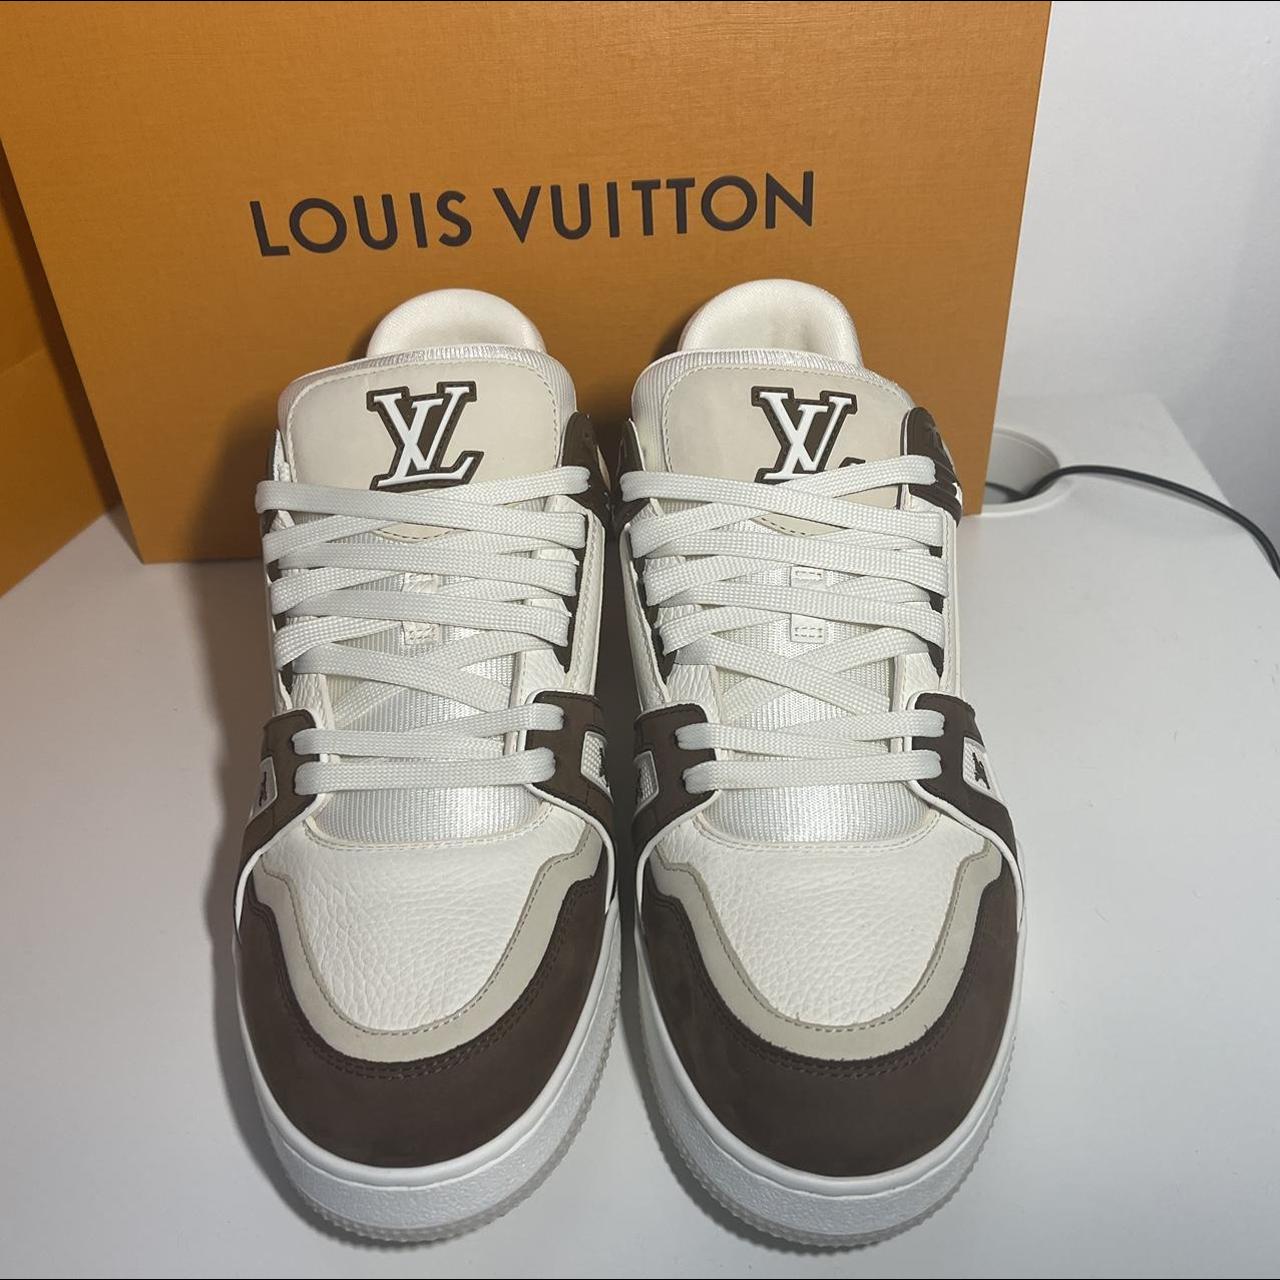 Brand new Louis Vuitton LV Trainer Moka & white... - Depop